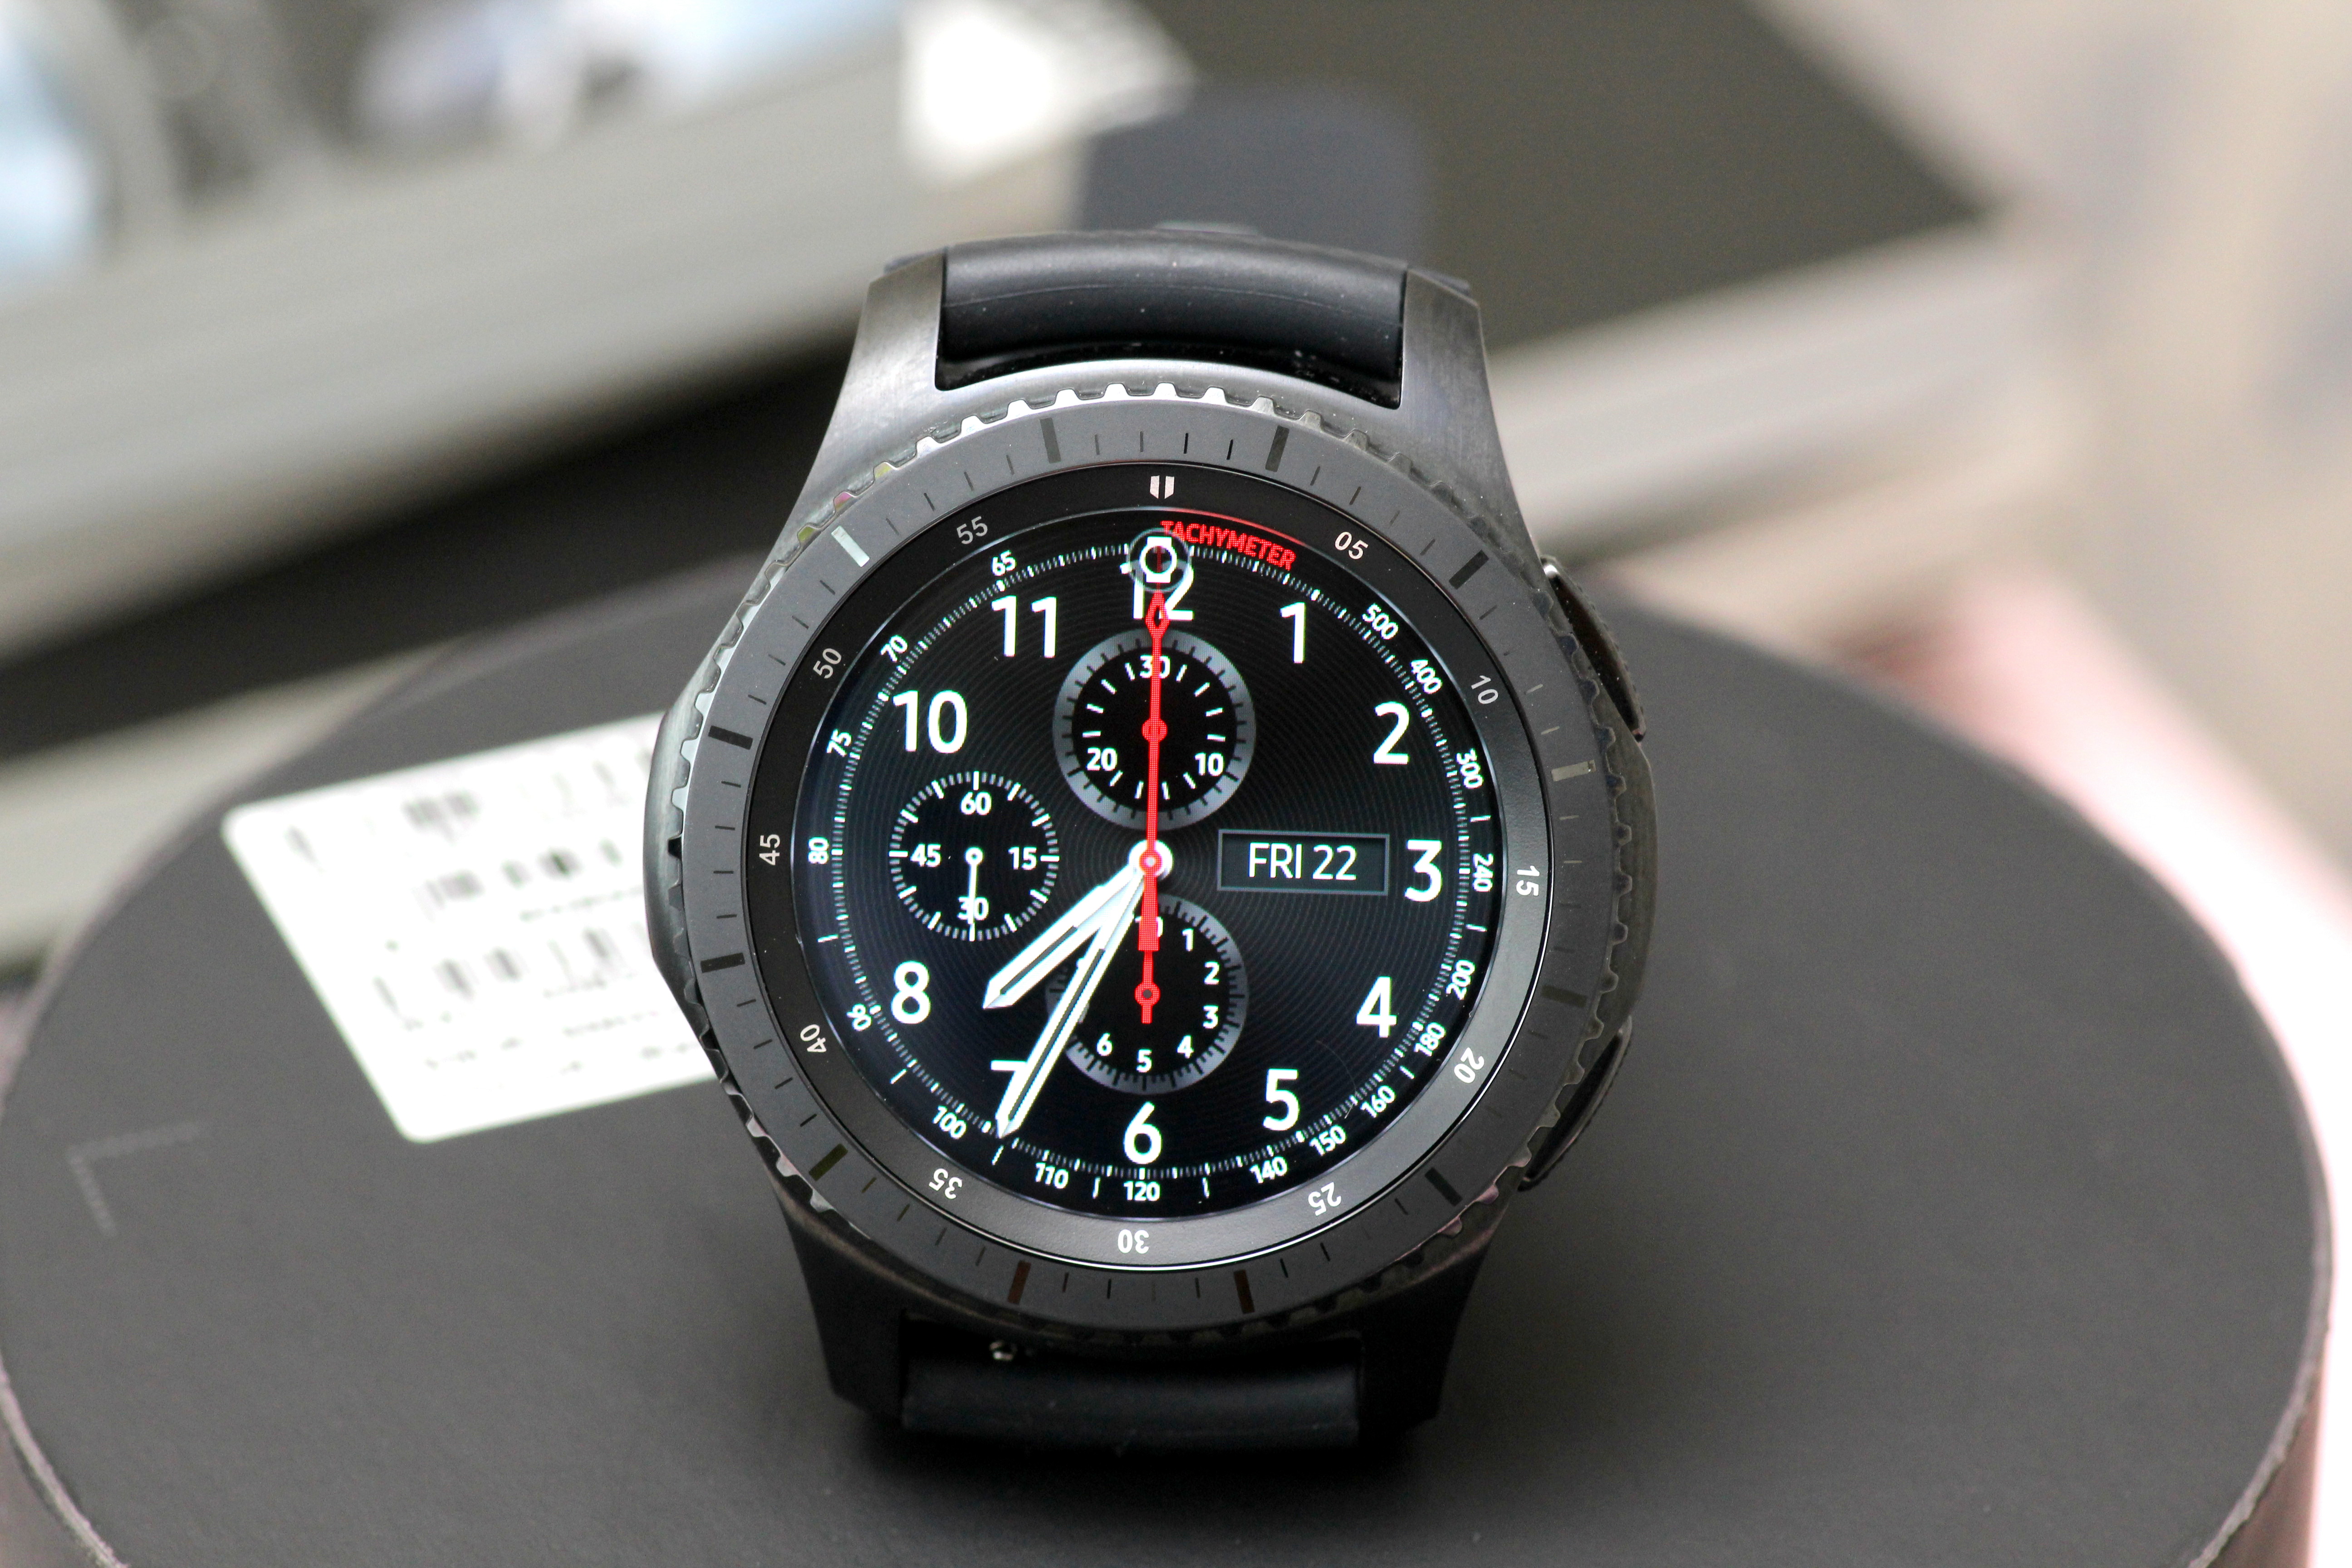 Часы Samsung Gear S3 Frontier, характеристики, дизайн, интерфейс